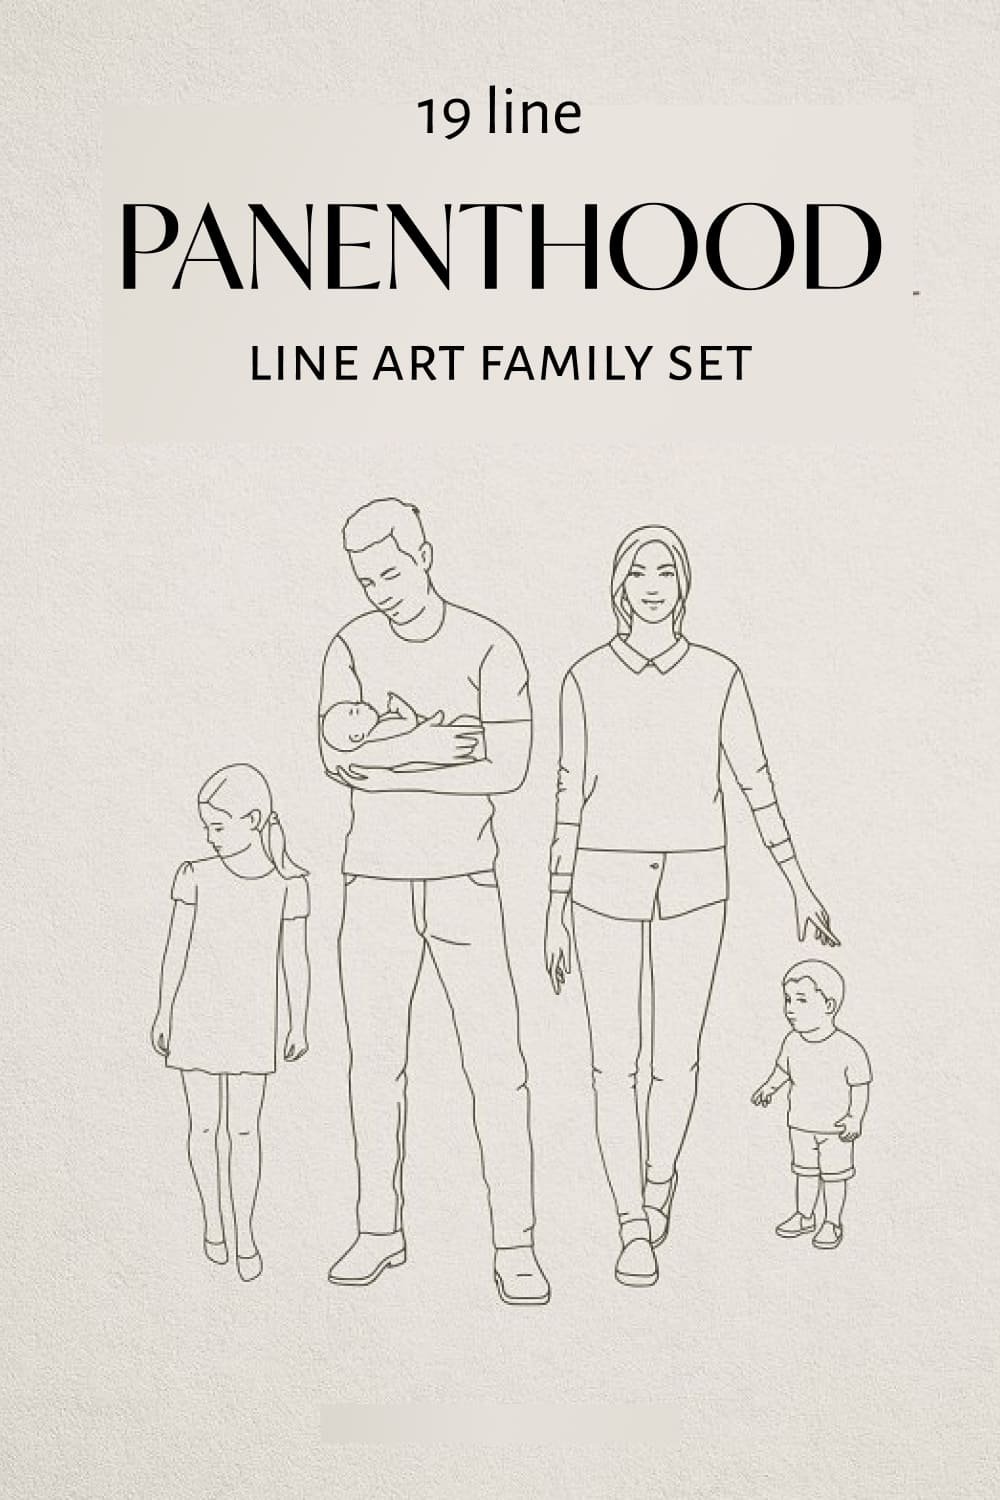 Parenthood. Line Art Family Set - Pinterest.